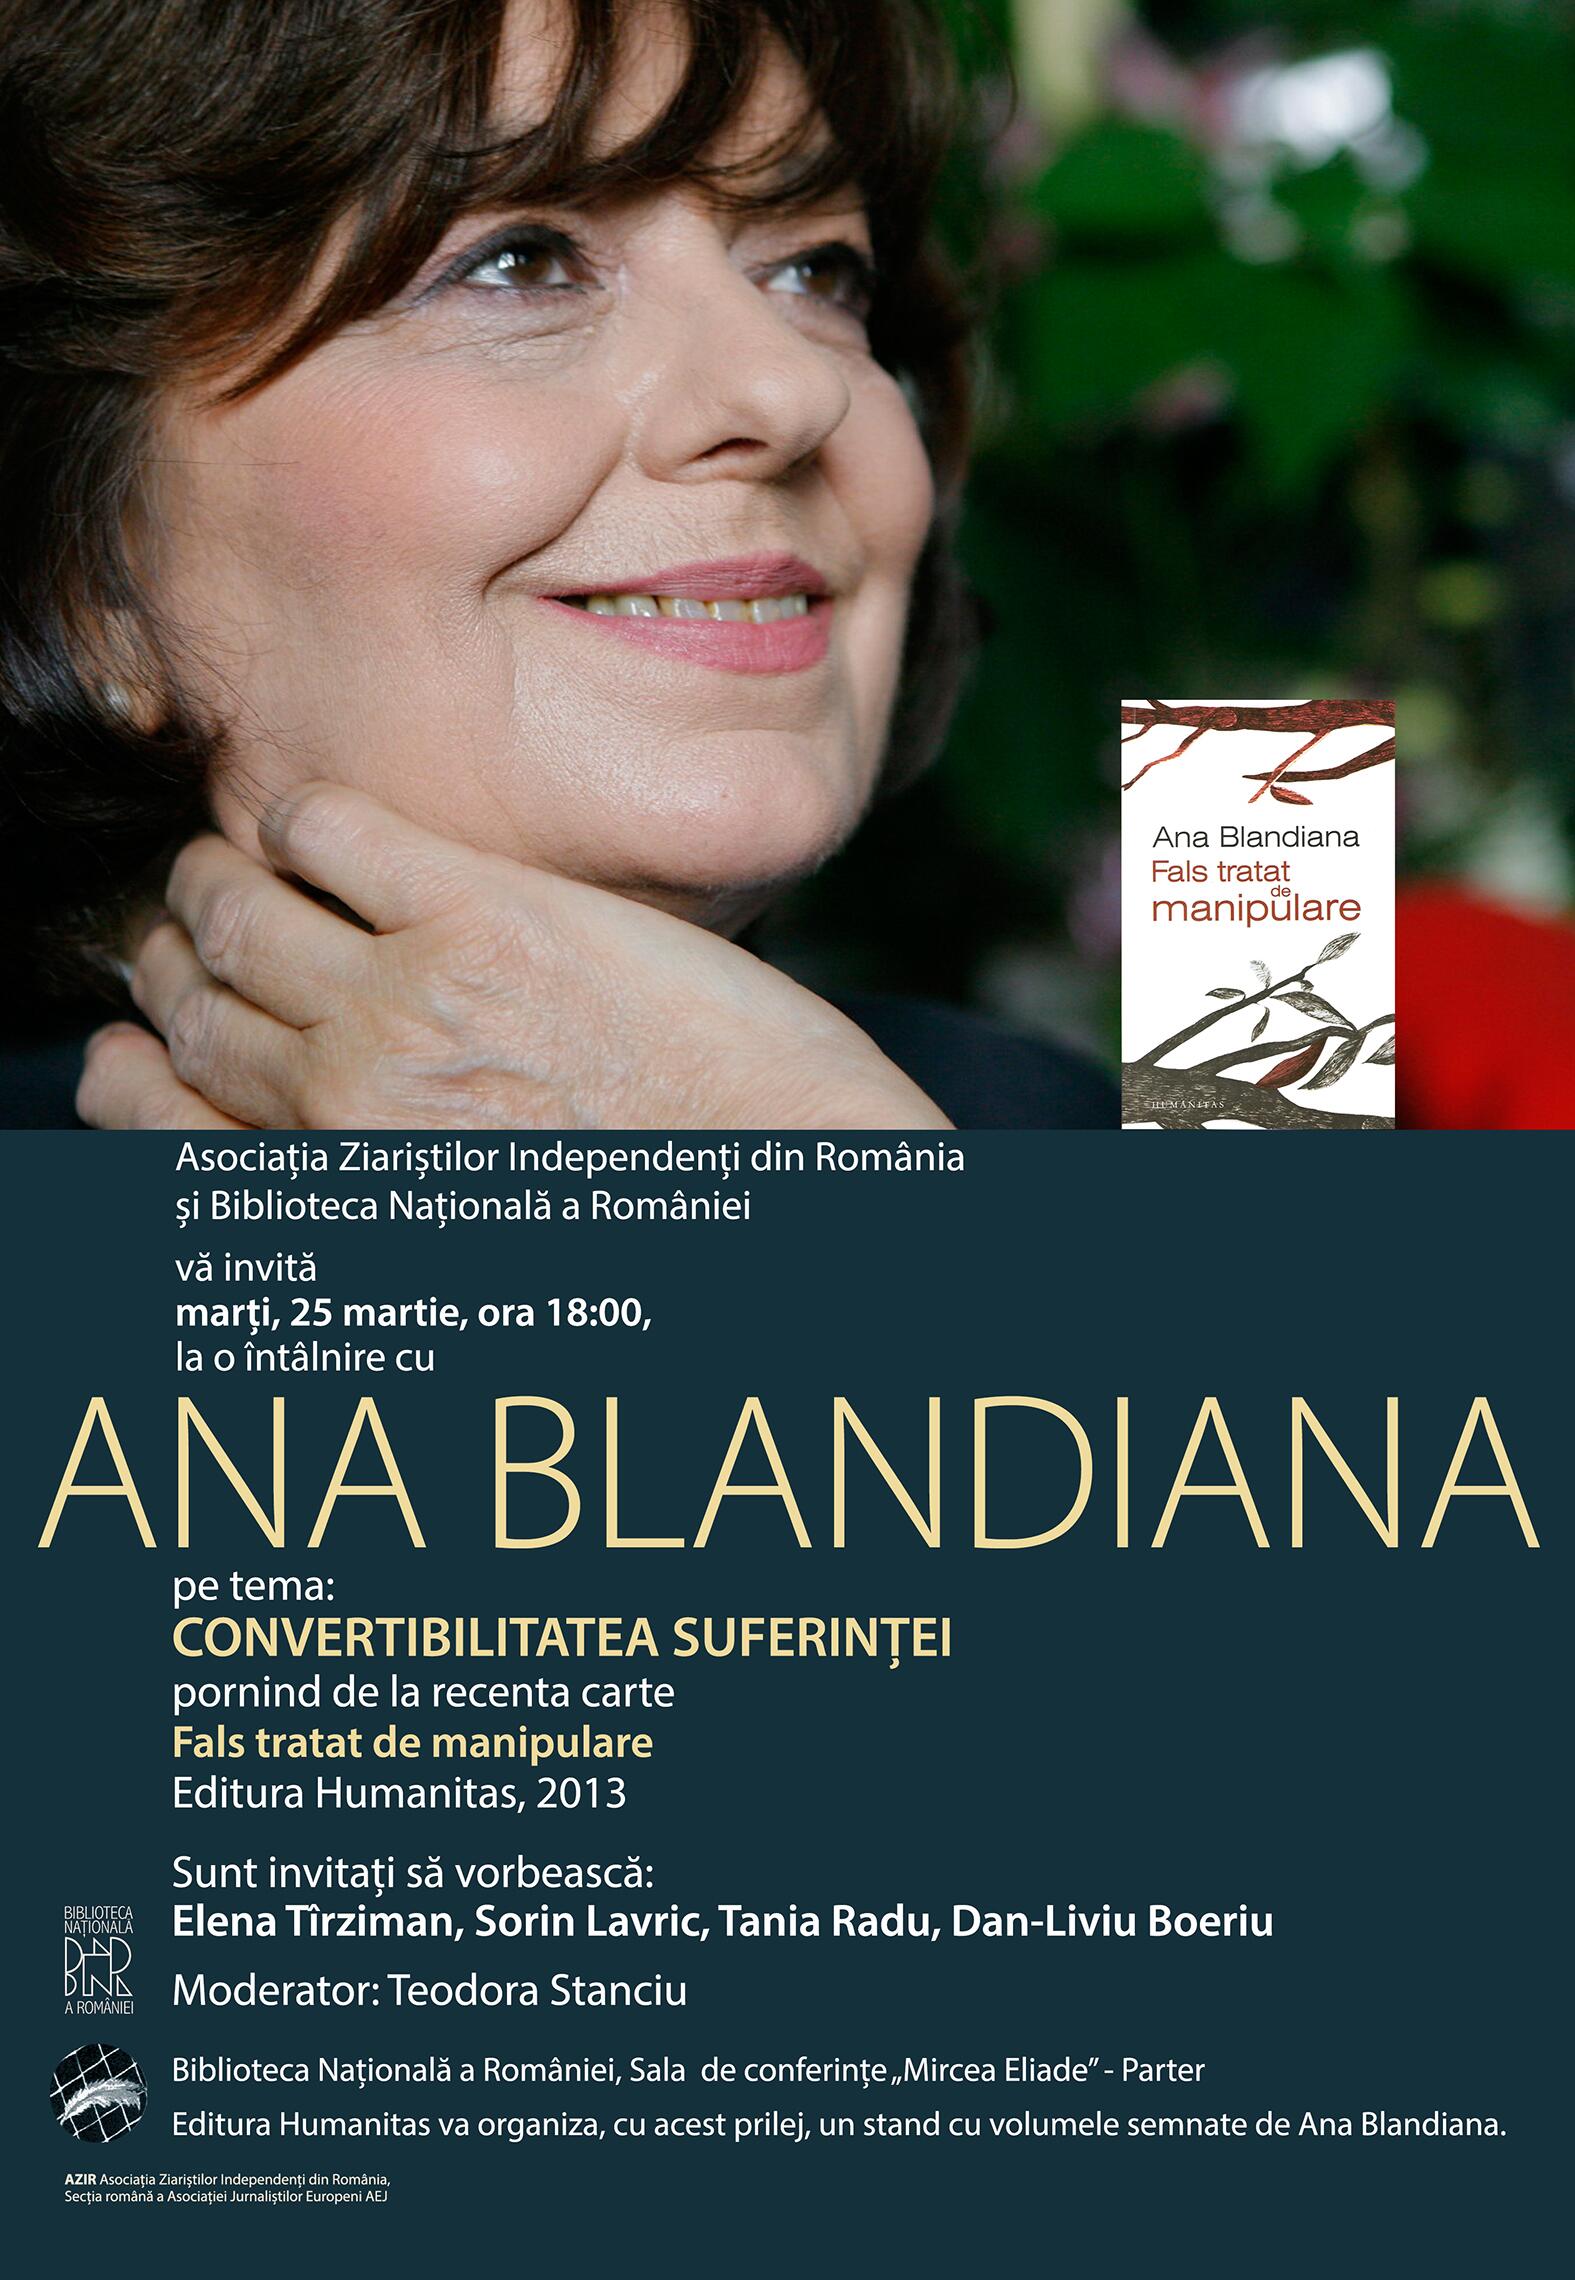 Ana Blandiana on Twitter: "Întalnire cu Ana Blandiana “Convertibilitatea  Suferintei” 25 Martie, ora 18:00 Biblioteca Nationala a României  http://t.co/pbr5Ew6yK7" / Twitter